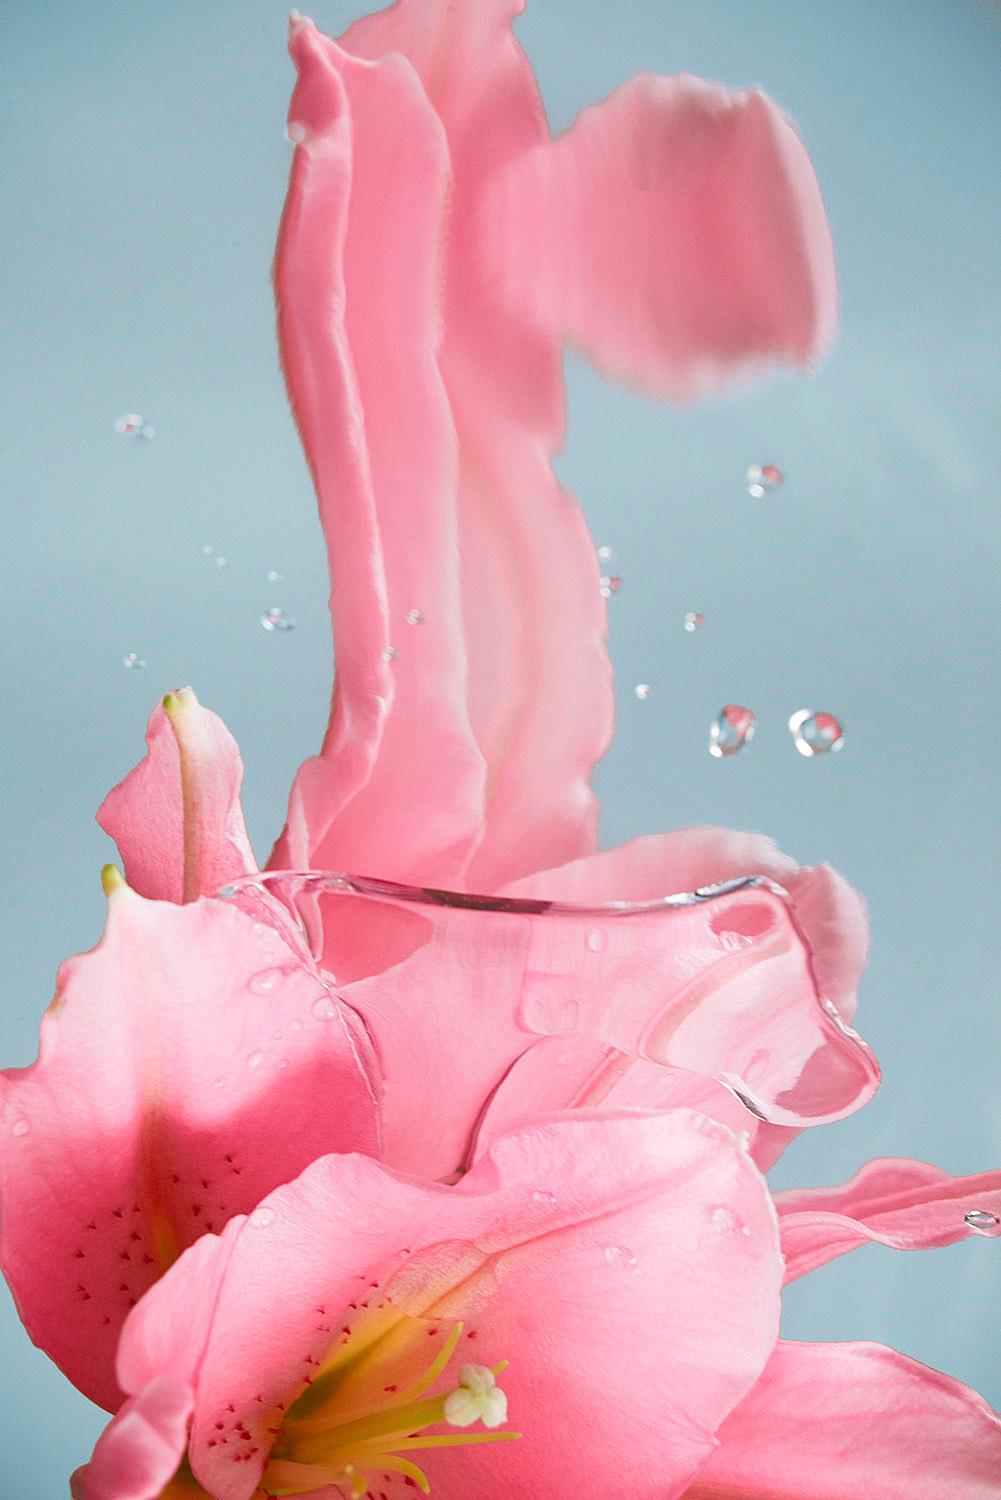 Sophie Delaporte Color Photograph - Flower, Pink, Freshness, Flowers#24